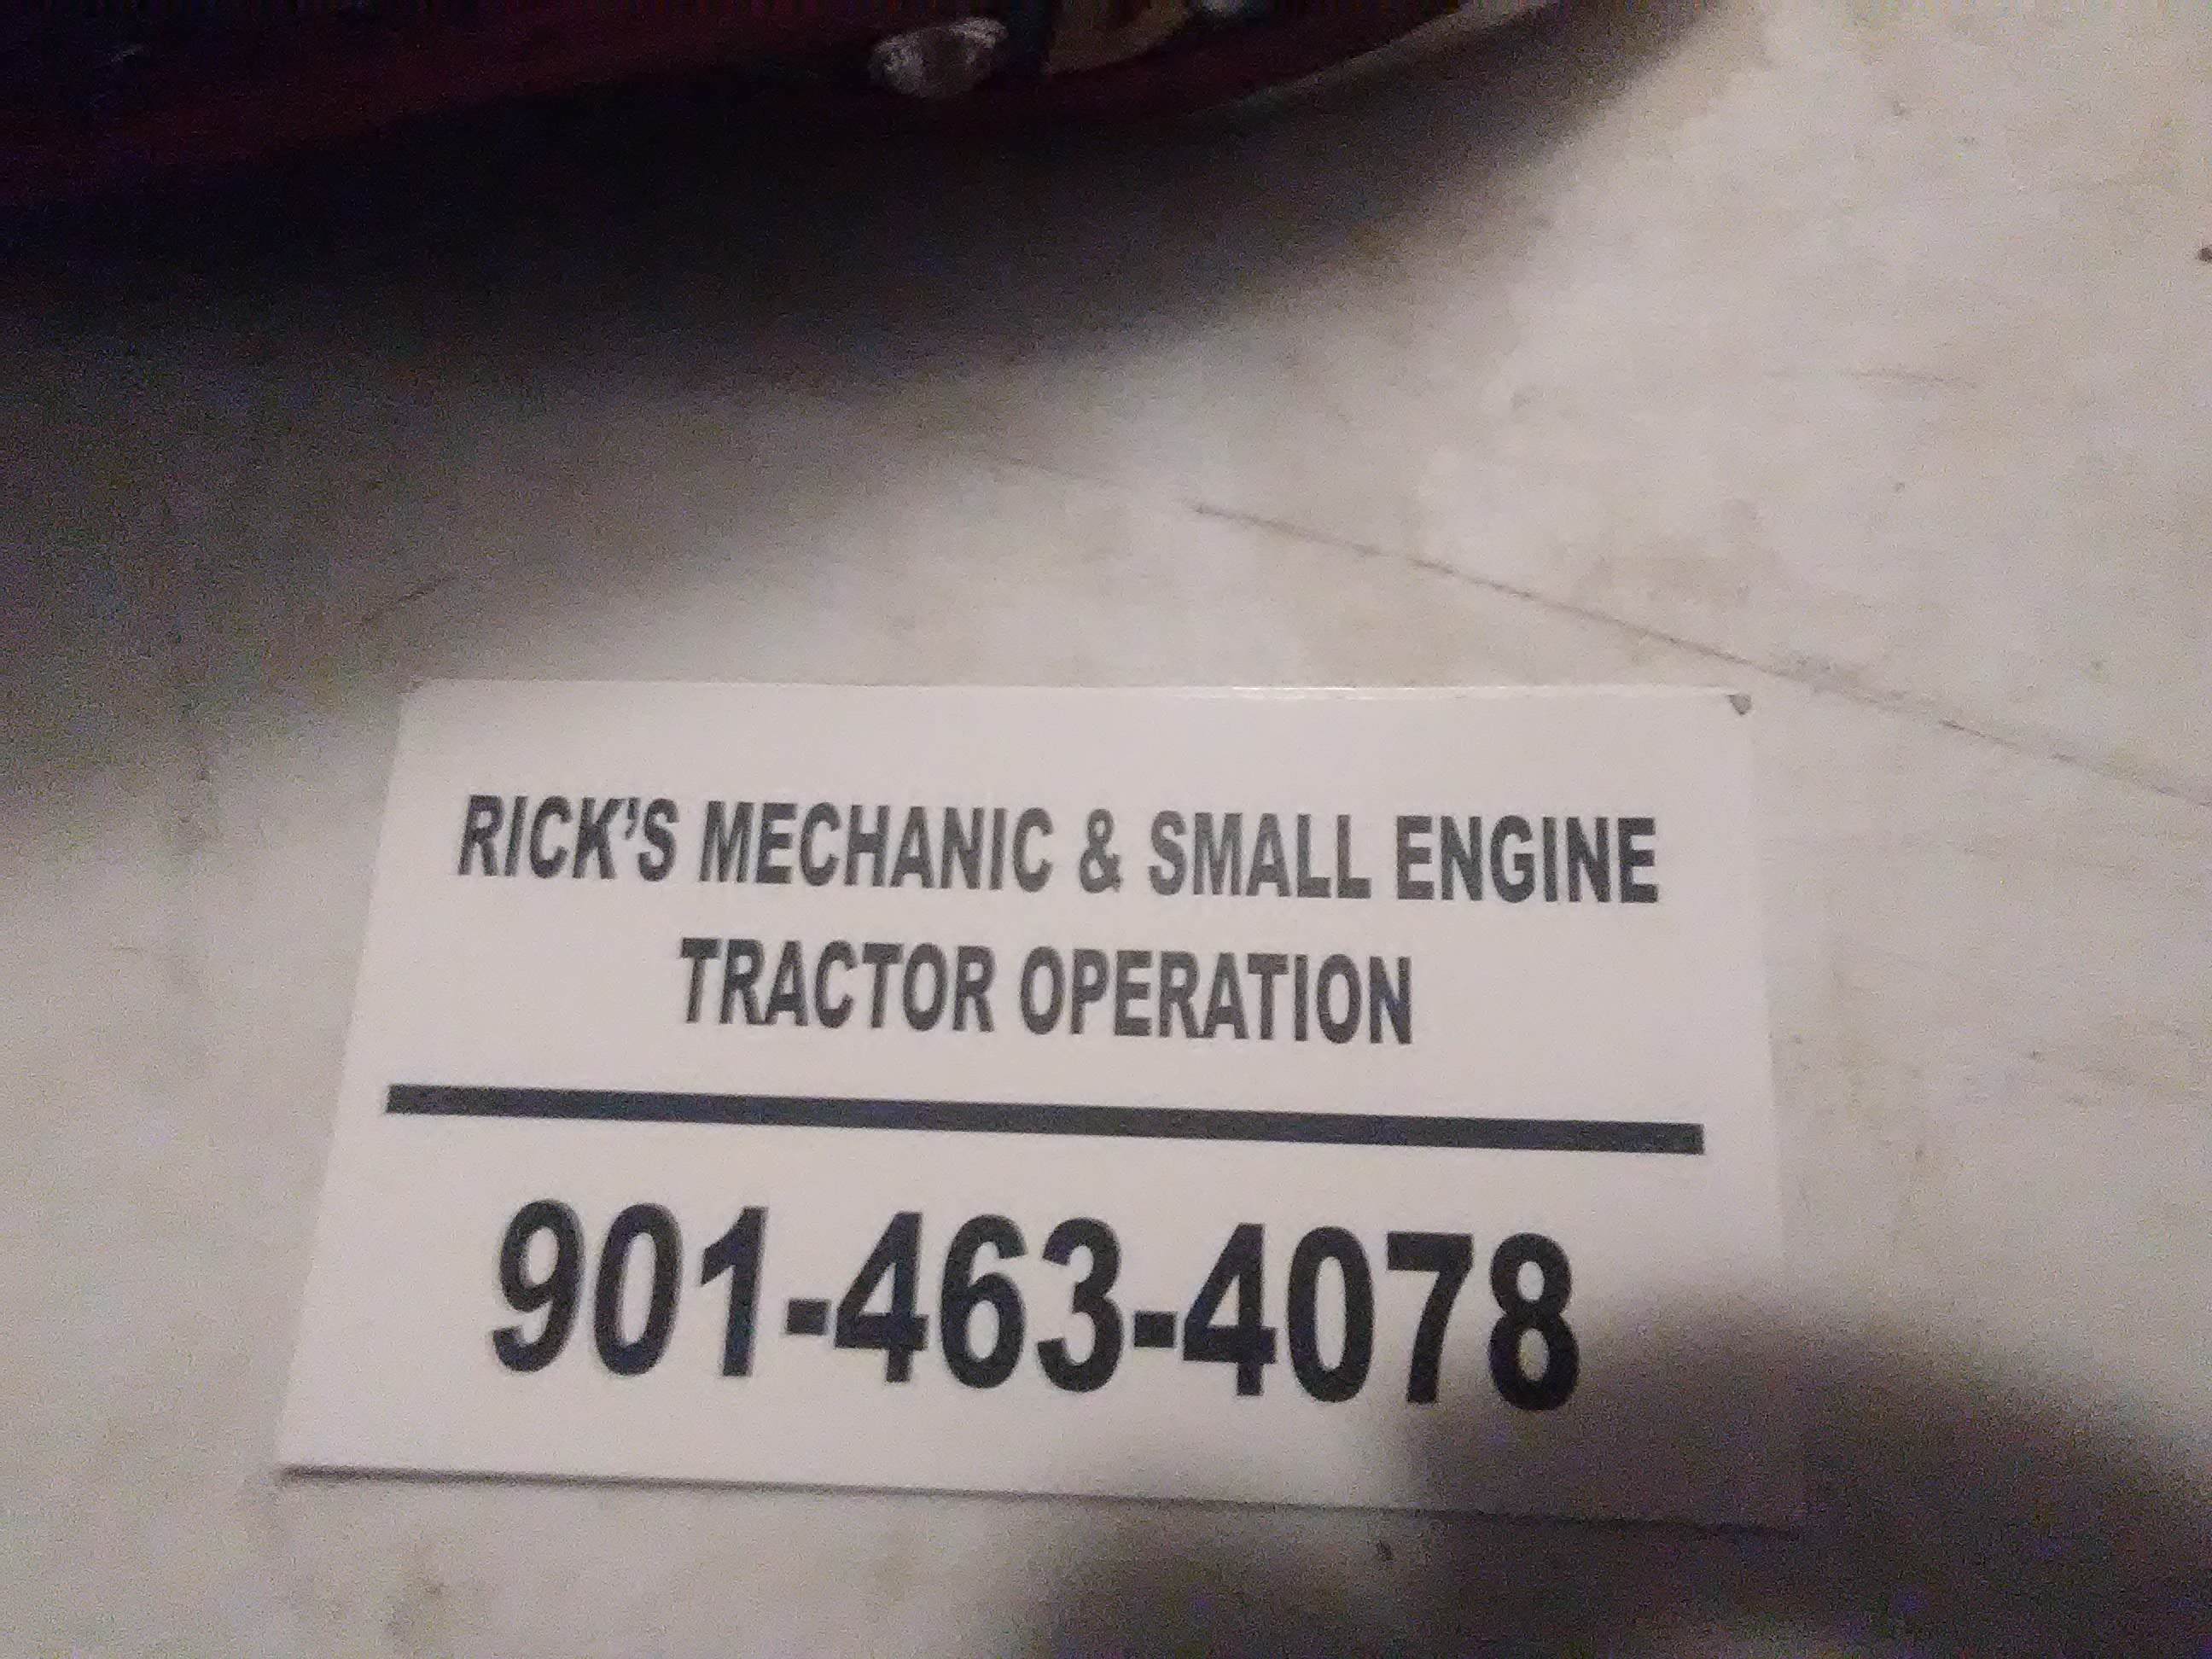 Rick's Mechanic and Small Engine